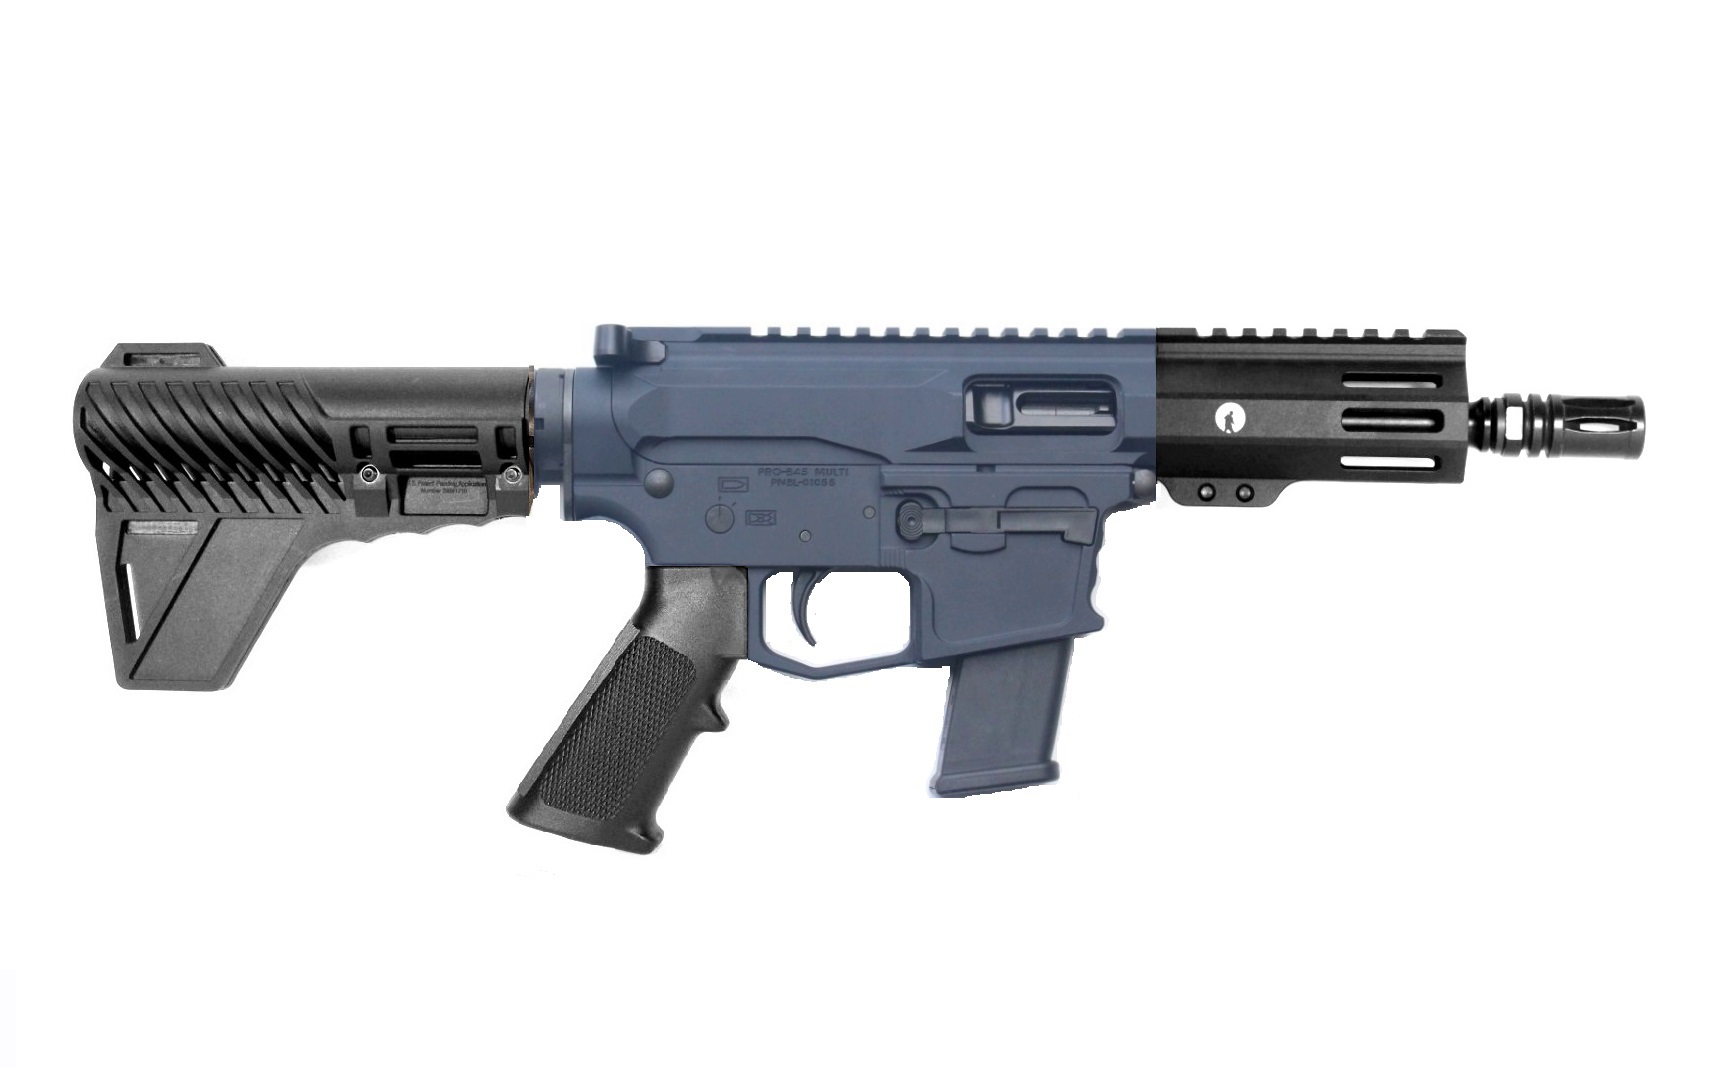 P2A PATRIOT 5.5" 40 S&W 1/16 Pistol Caliber Melonite M-LOK Pistol - For Suppressors - GRAY/BLK